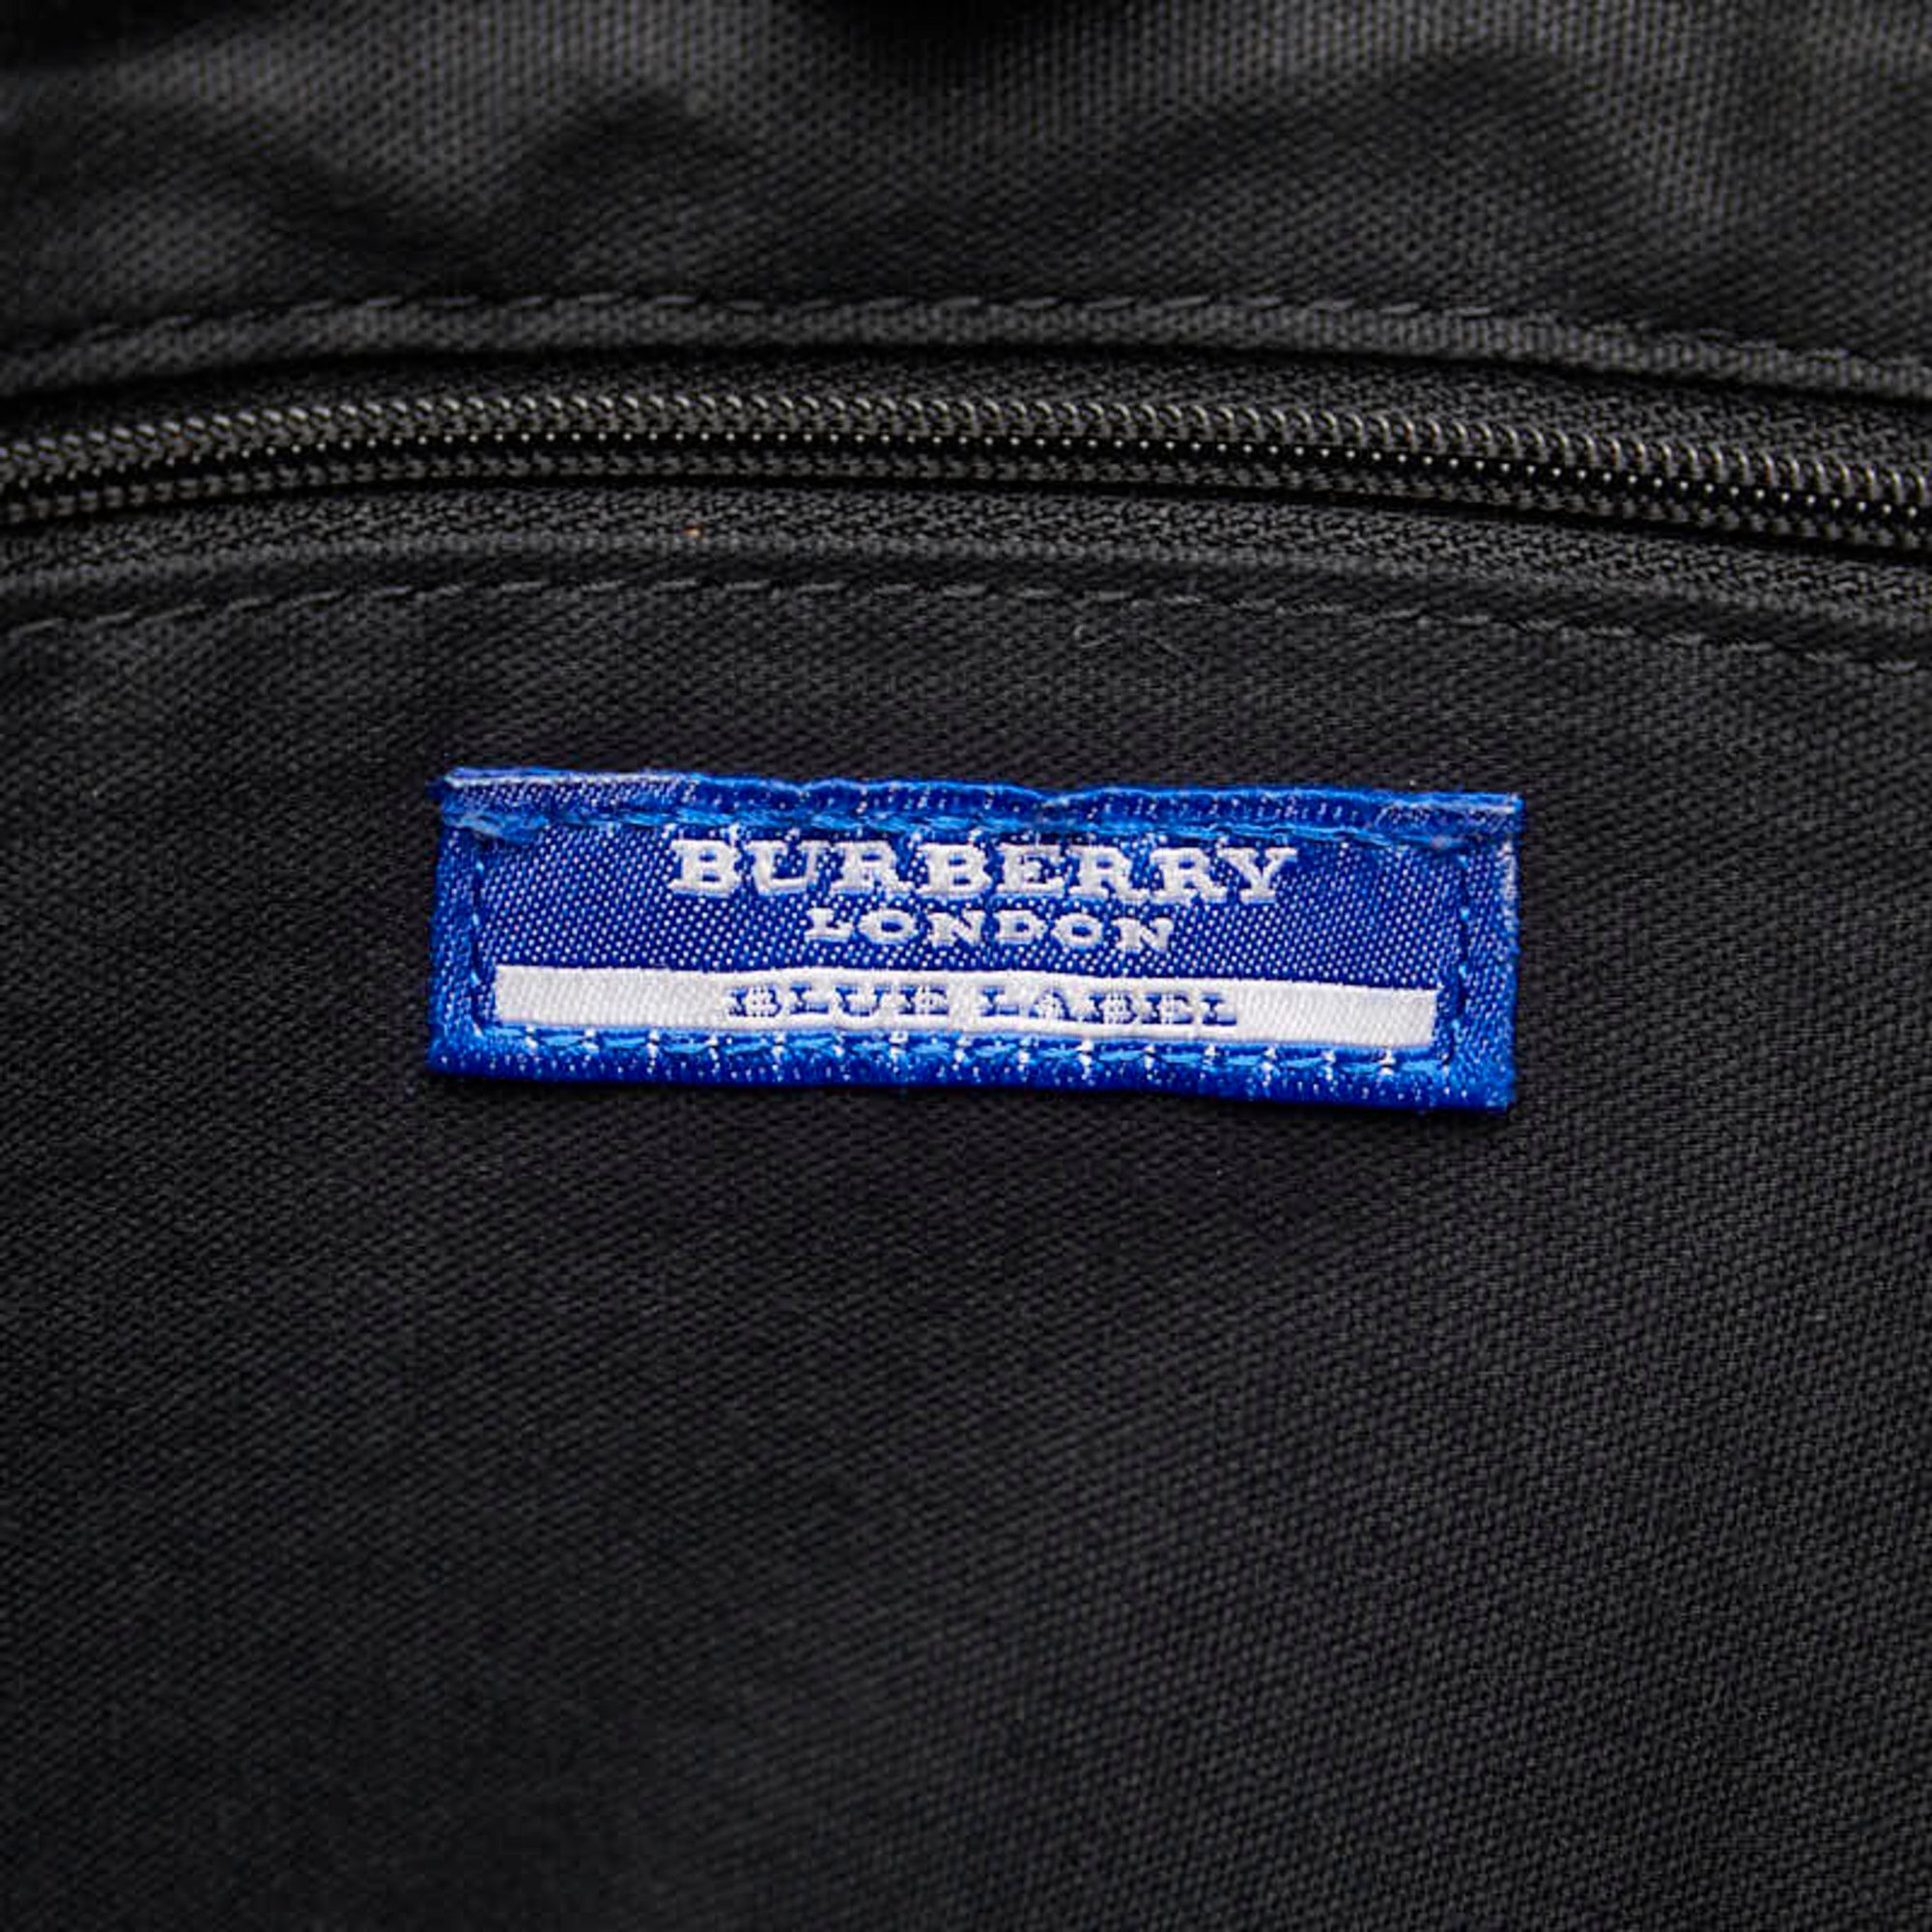 Burberry Nova Check Blue Label Tote Bag Beige Black Canvas Leather Women's BURBERRY